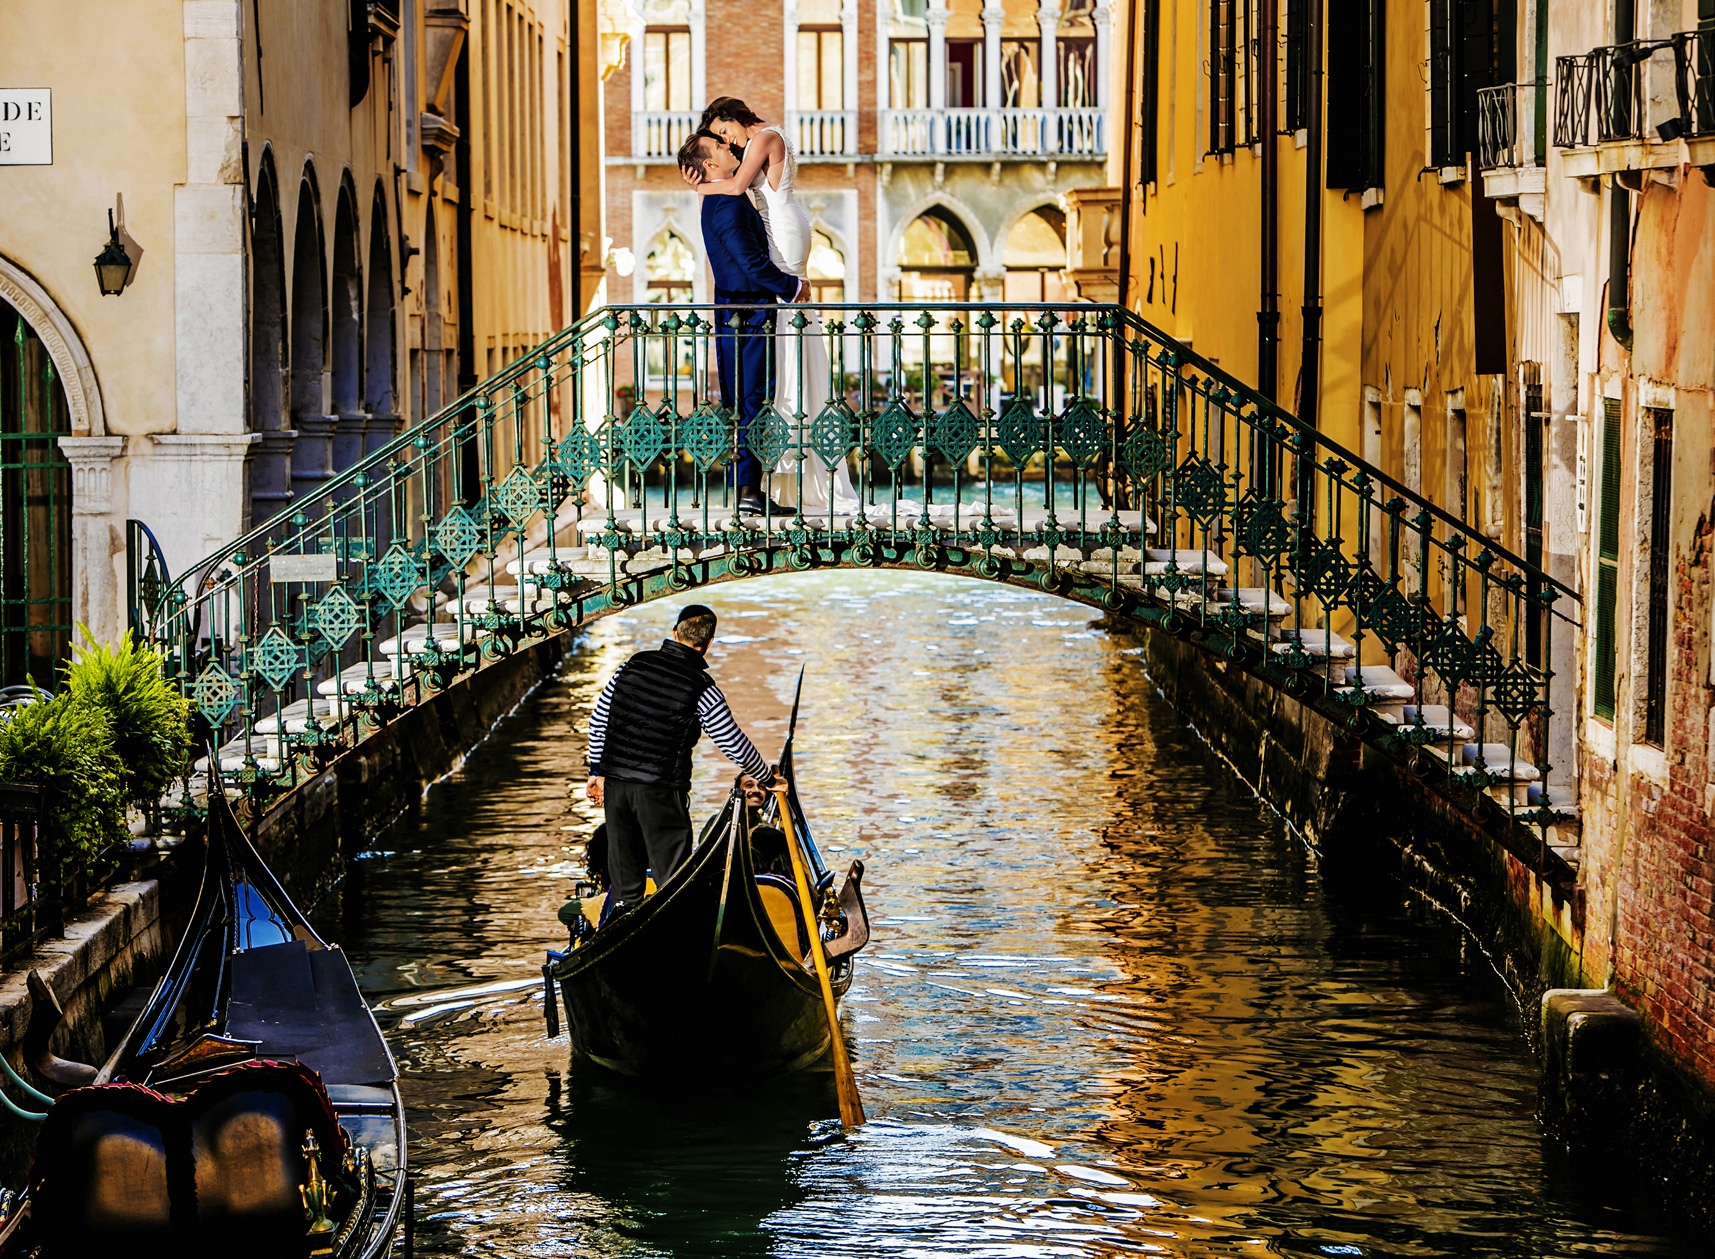 Boda por Ginés López fotógrafos de boda en Murcía, en un puente muy especial de Venecia.